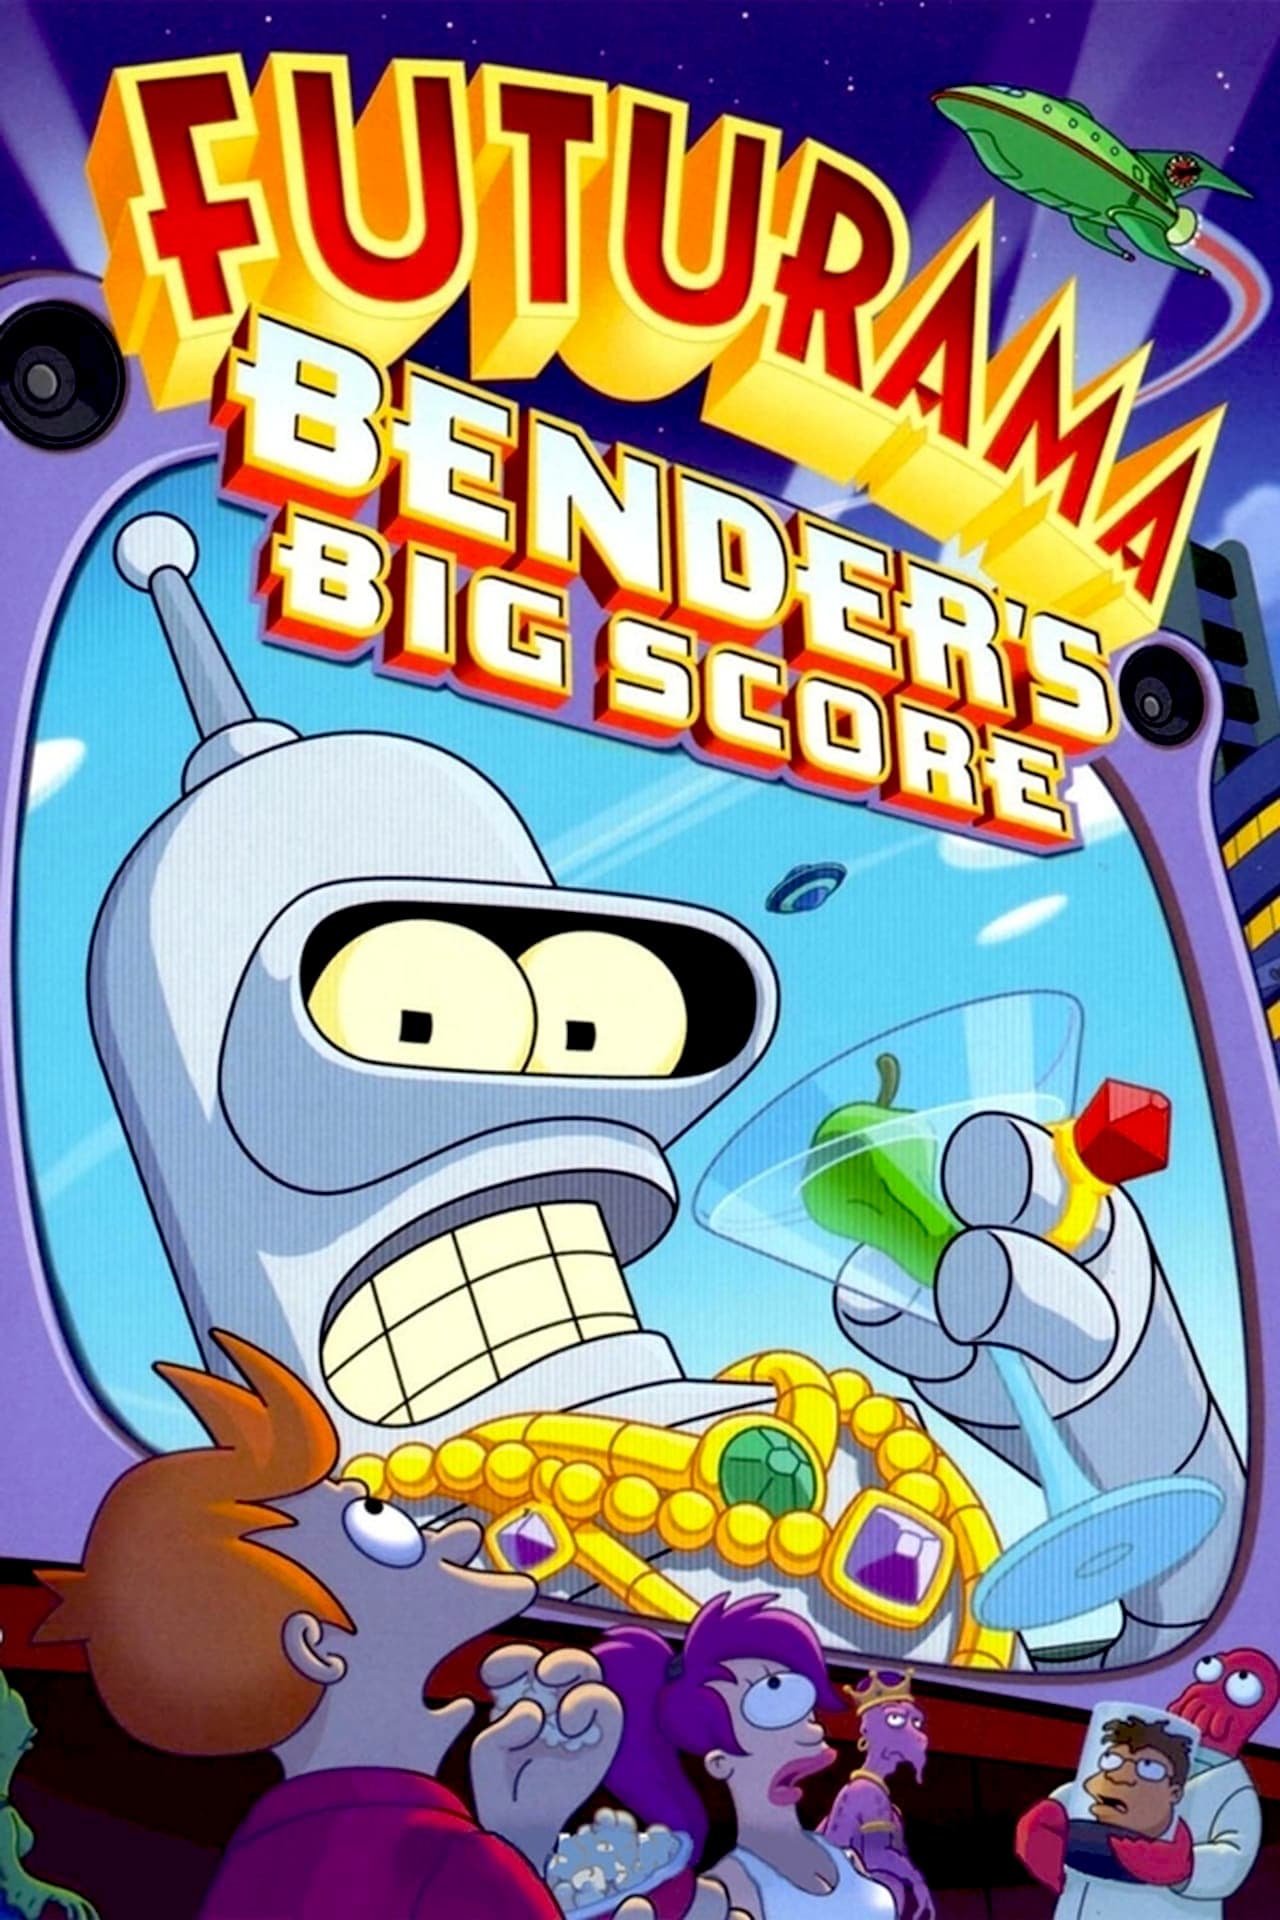 Futurama: Bender's Big Score (2007)